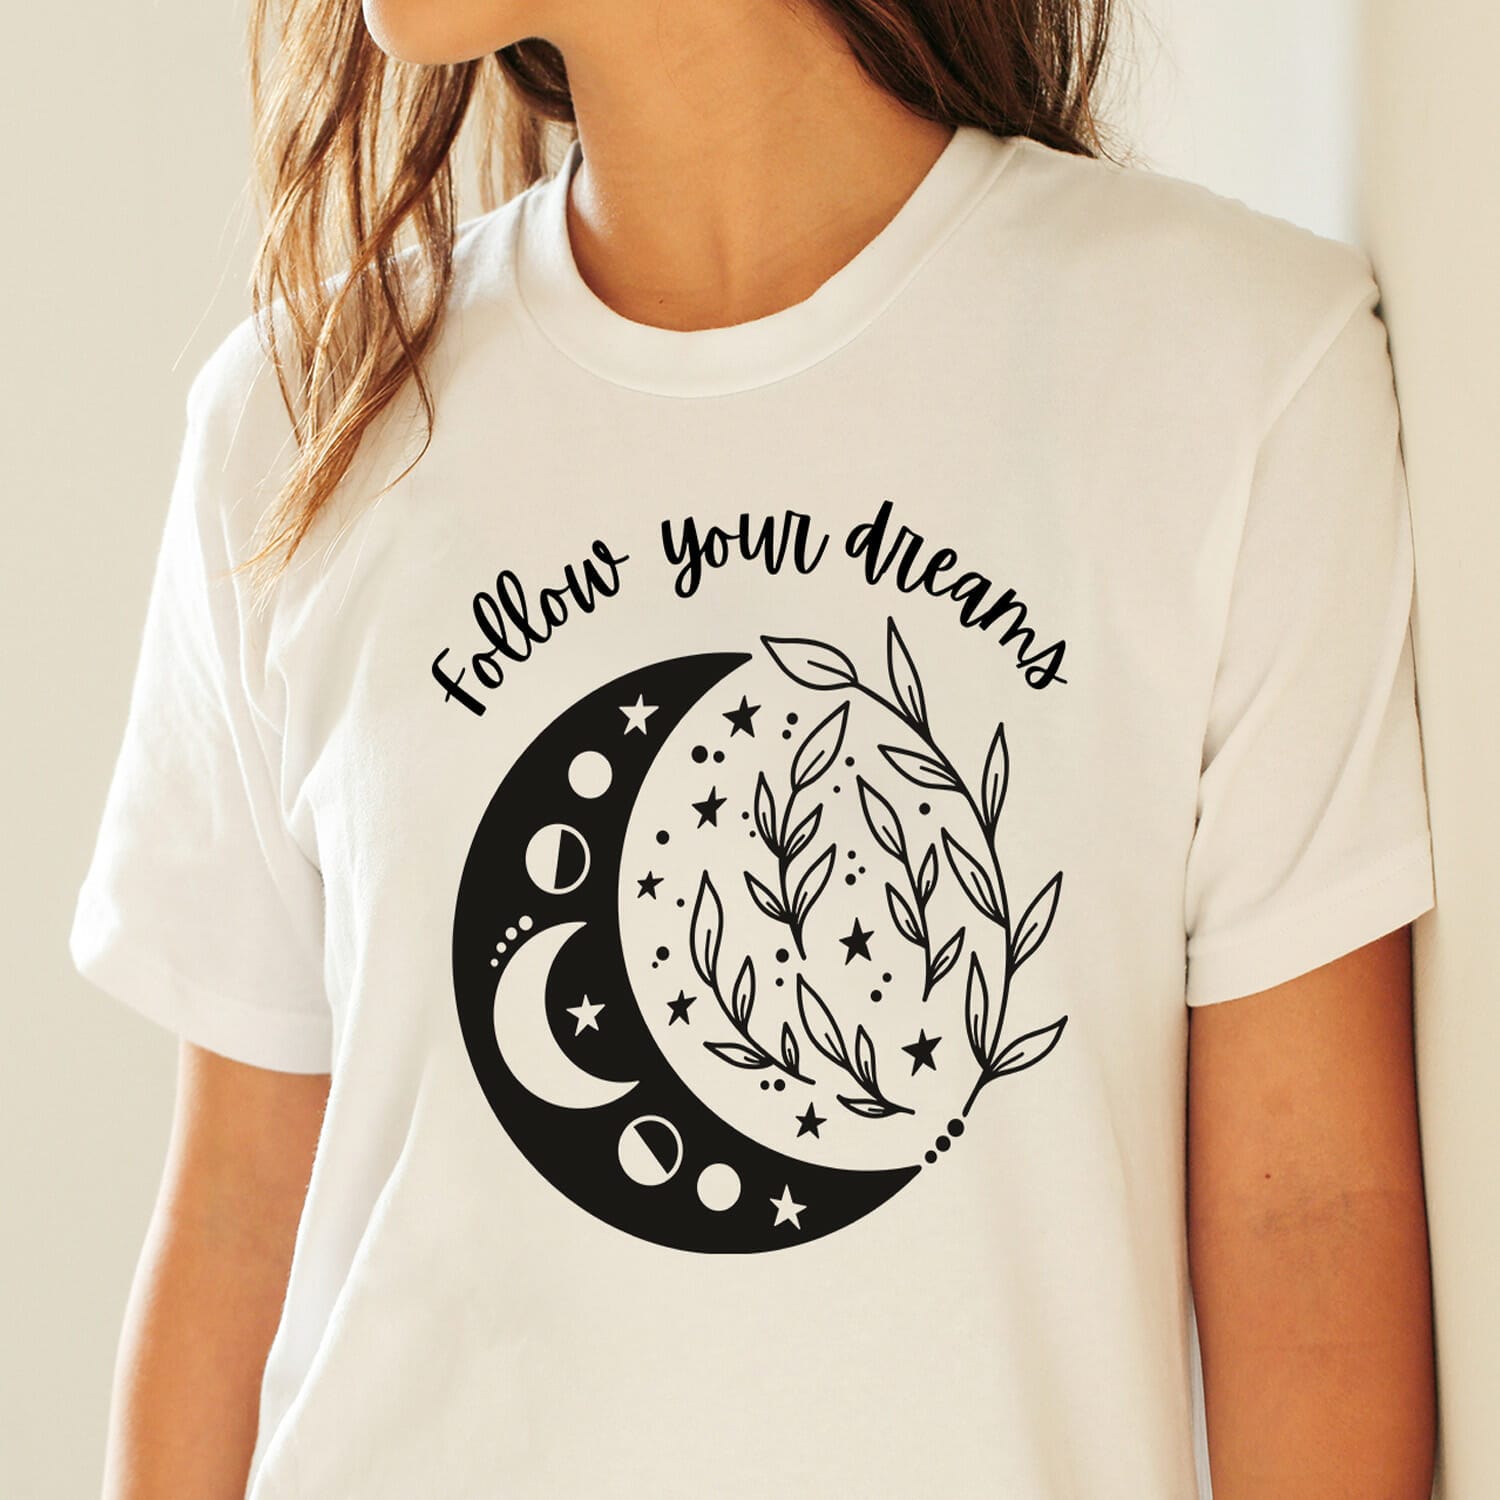 Boho Inspirational Follow your Dreams T-shirt design for women